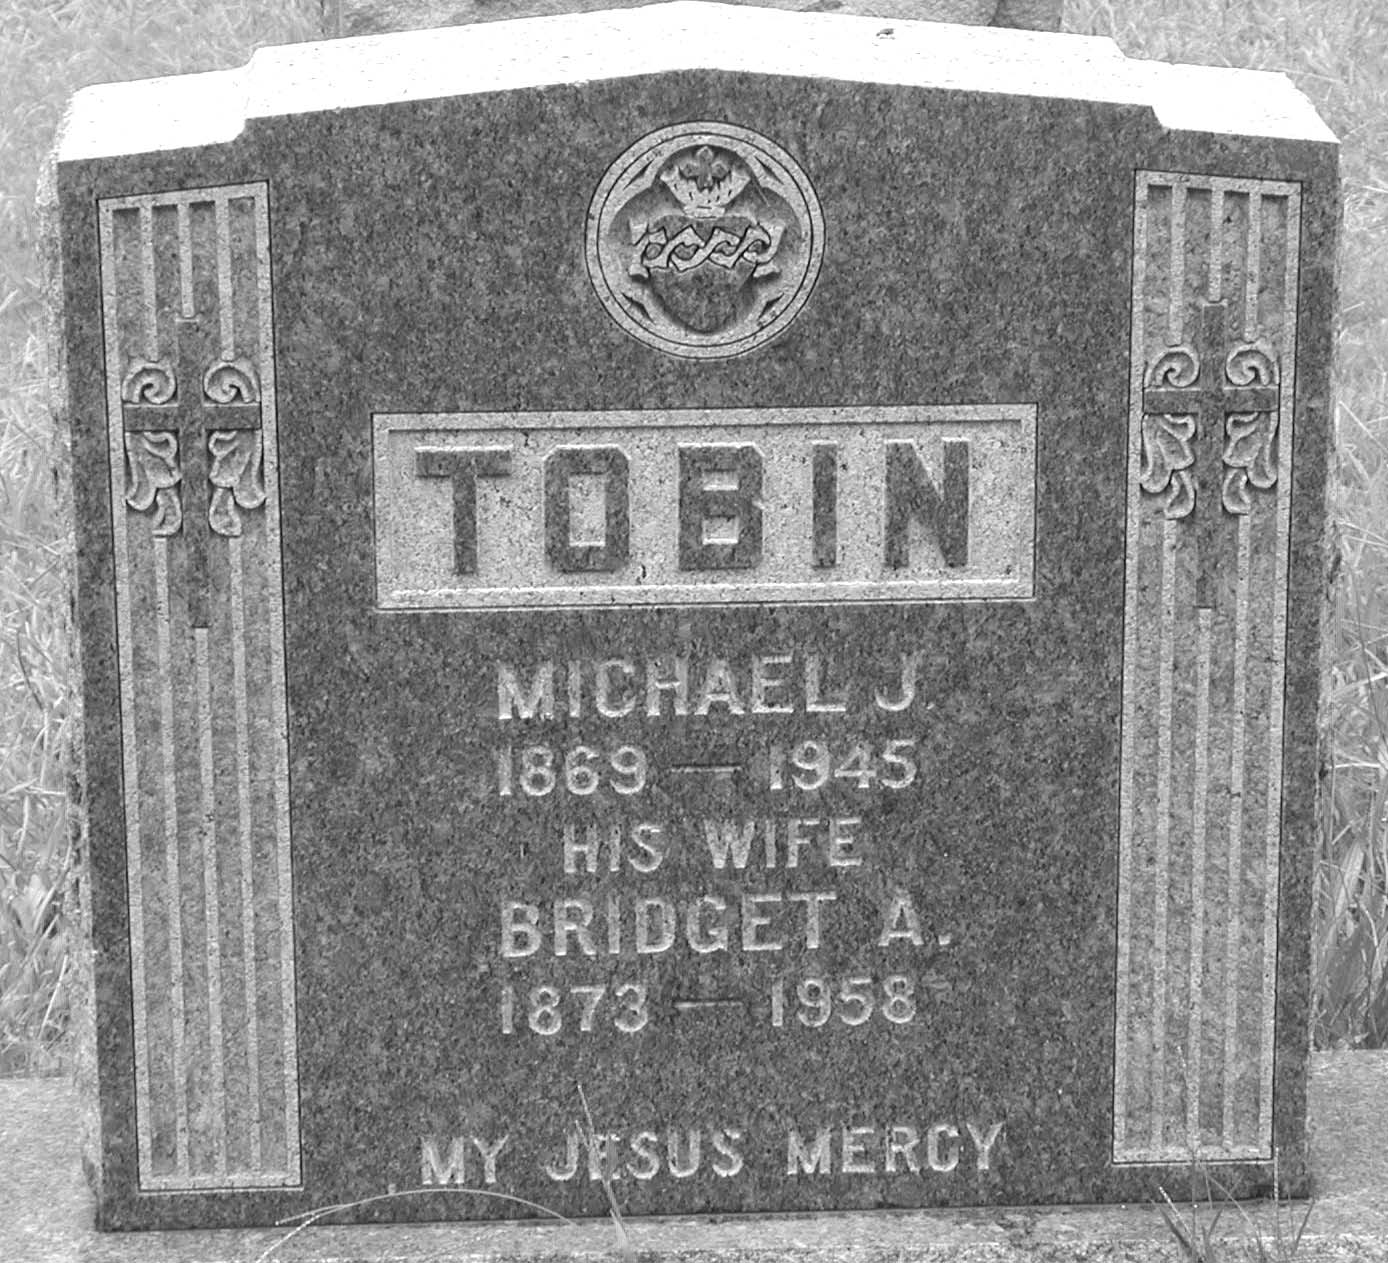 Tobin, Michael J. and Bridget A.jpg 243.2K